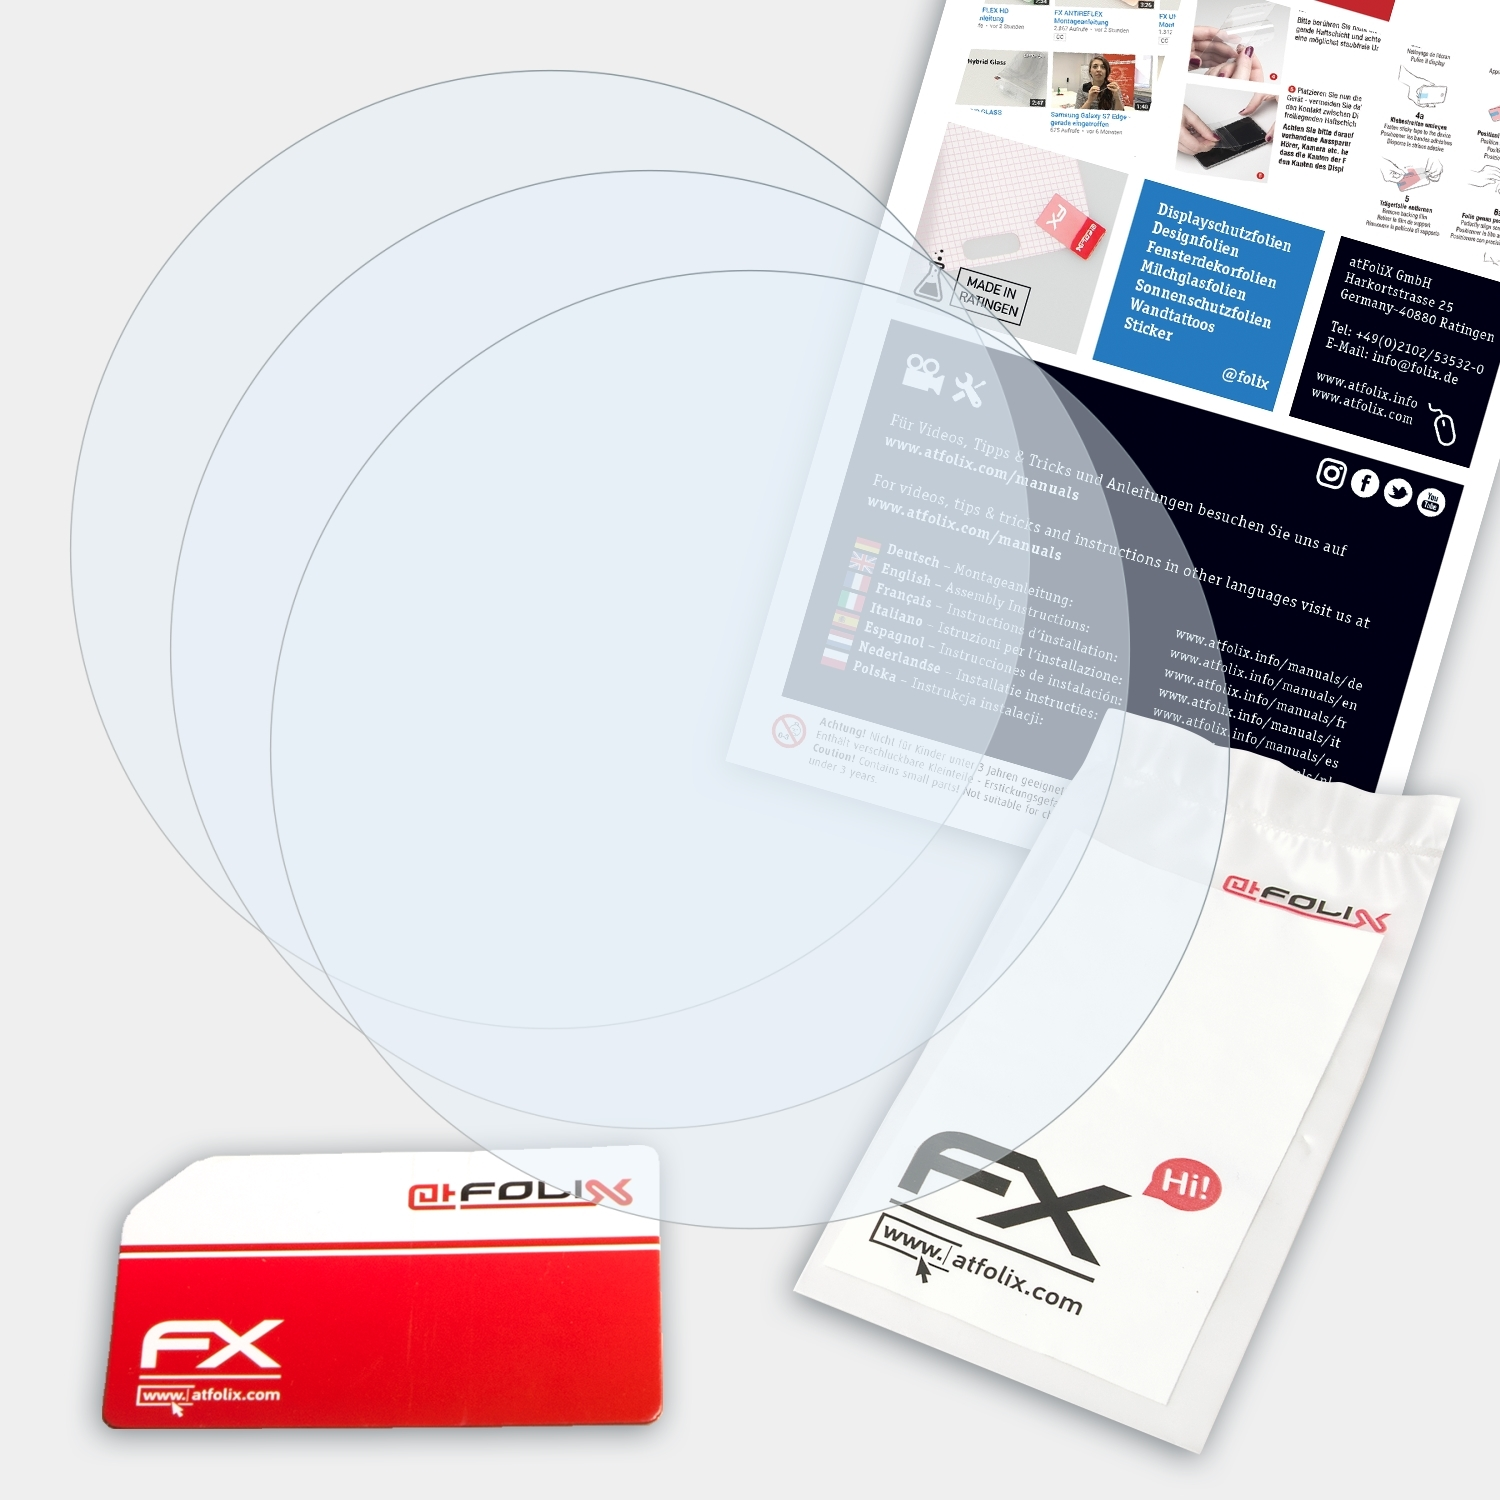 ATFOLIX 3x U) Displayschutz(für Watch FES Sony FX-Clear